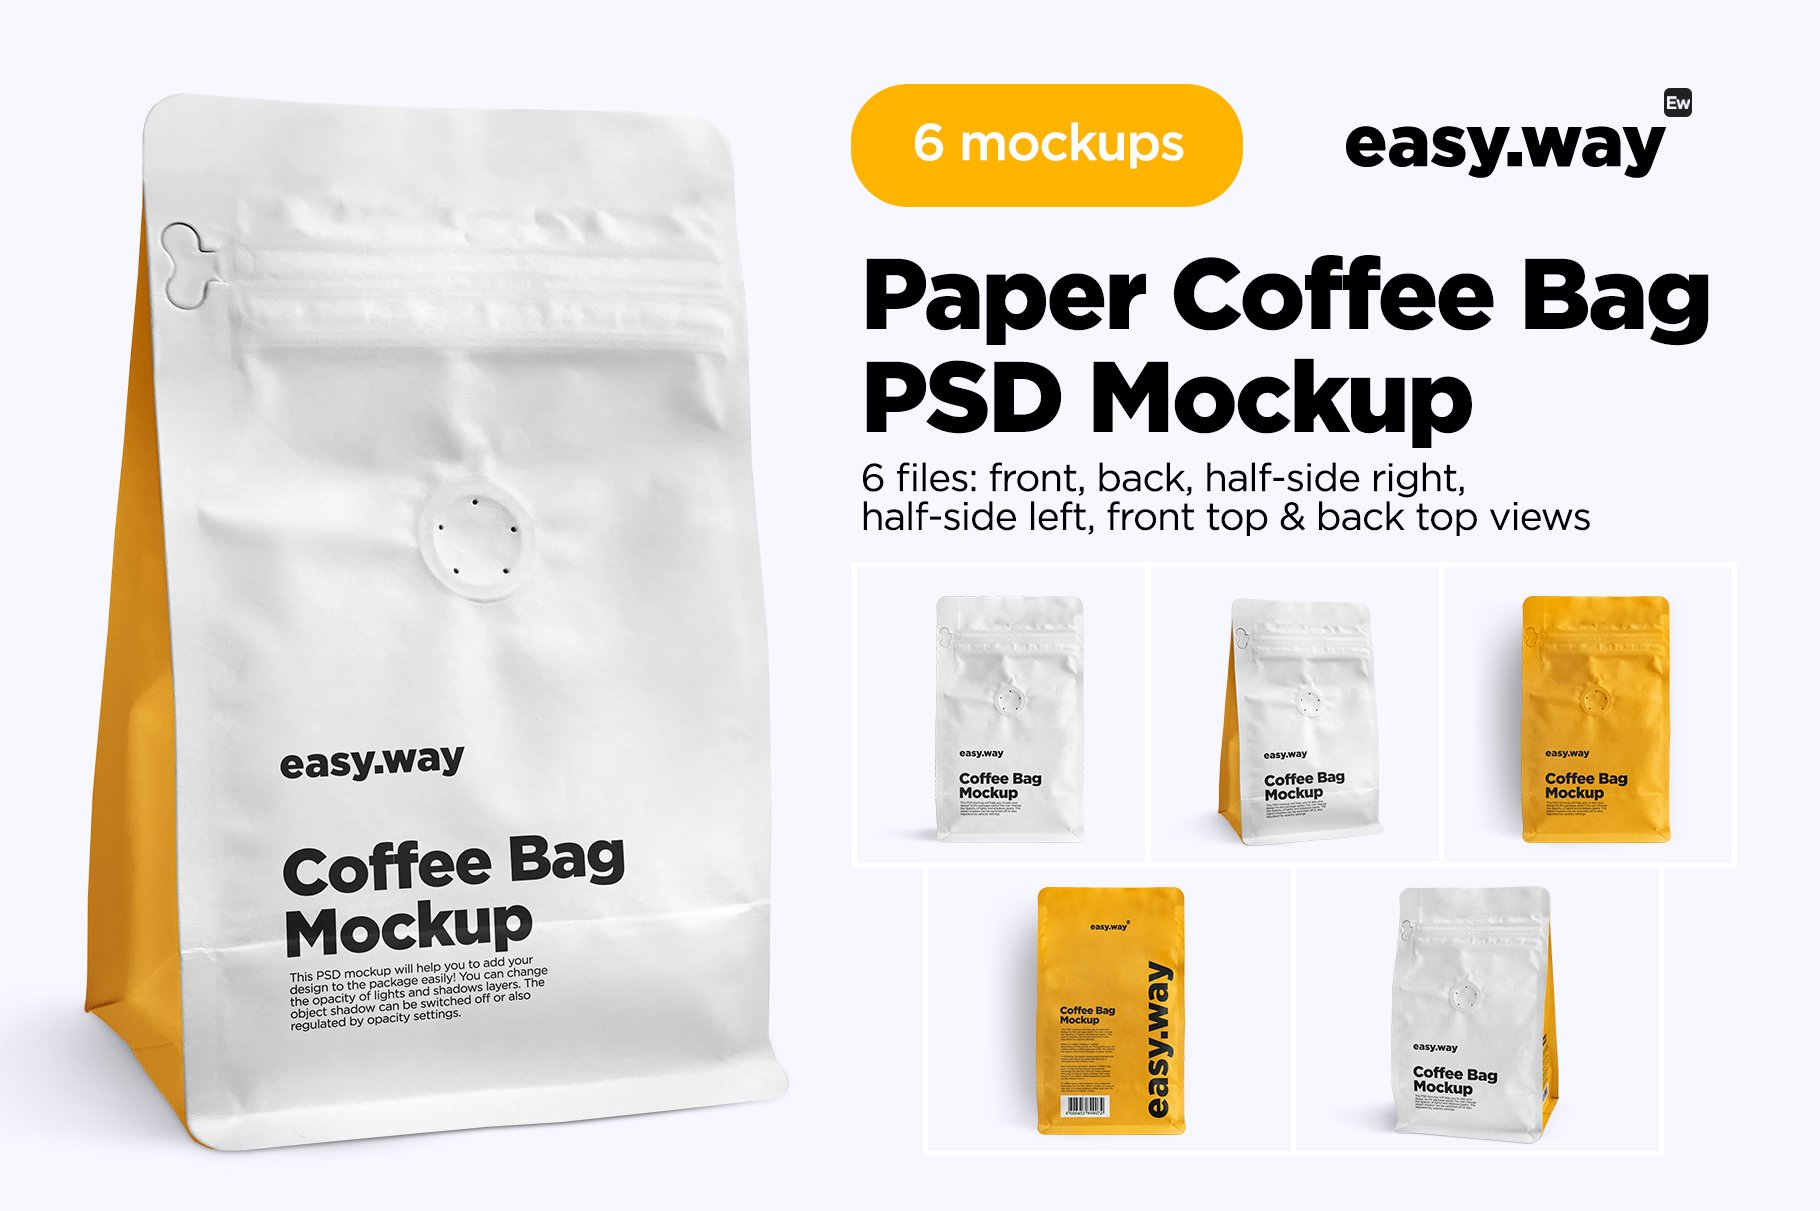 Paper Coffee Bag PSD Mockups Set cover image.